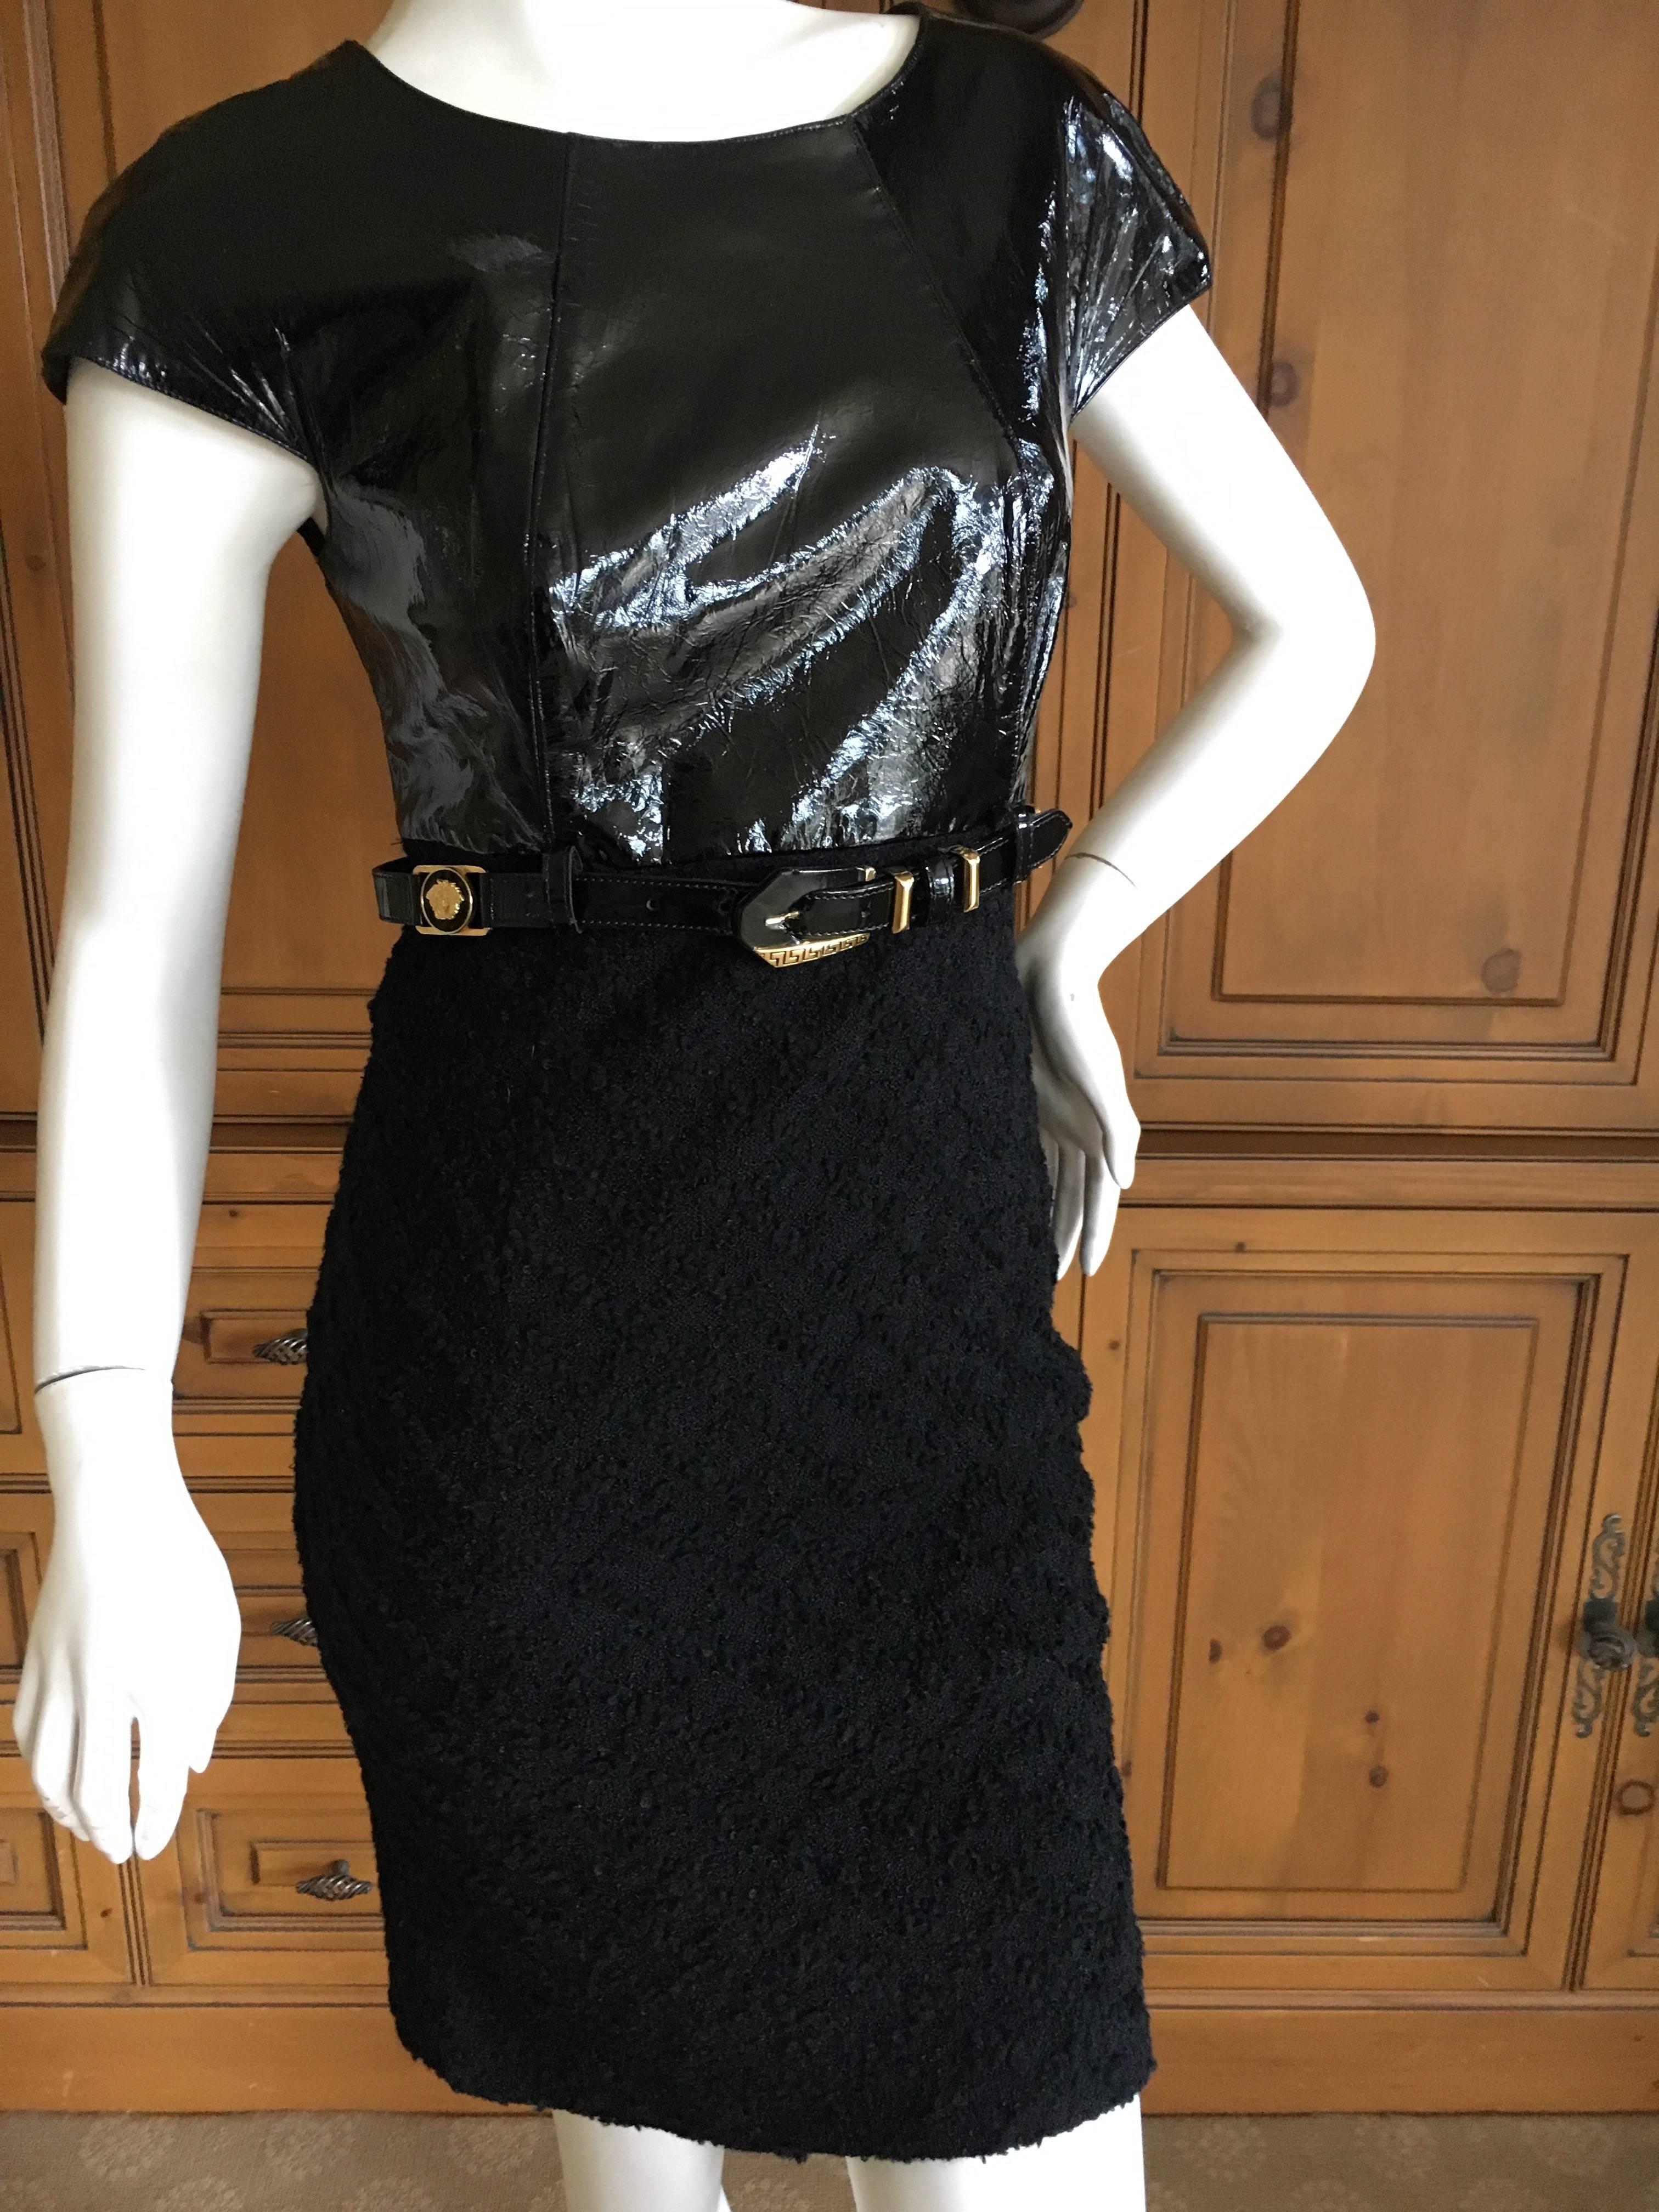 Gianni Versace Couture 1980's Black Patent & Boucle Mini Dress w Medusa Belt.
Size 8
Bust 34